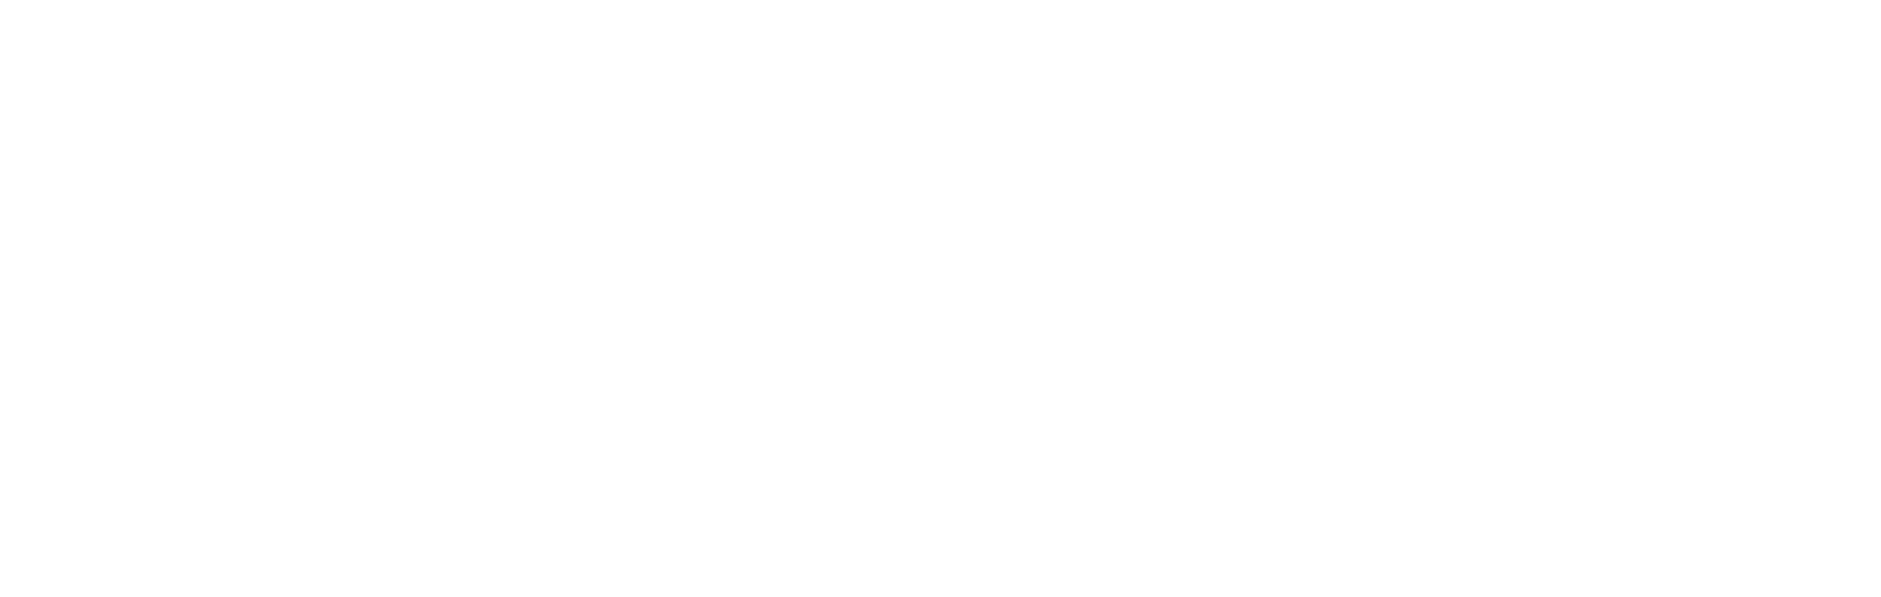 The Kenwood by Senior Star